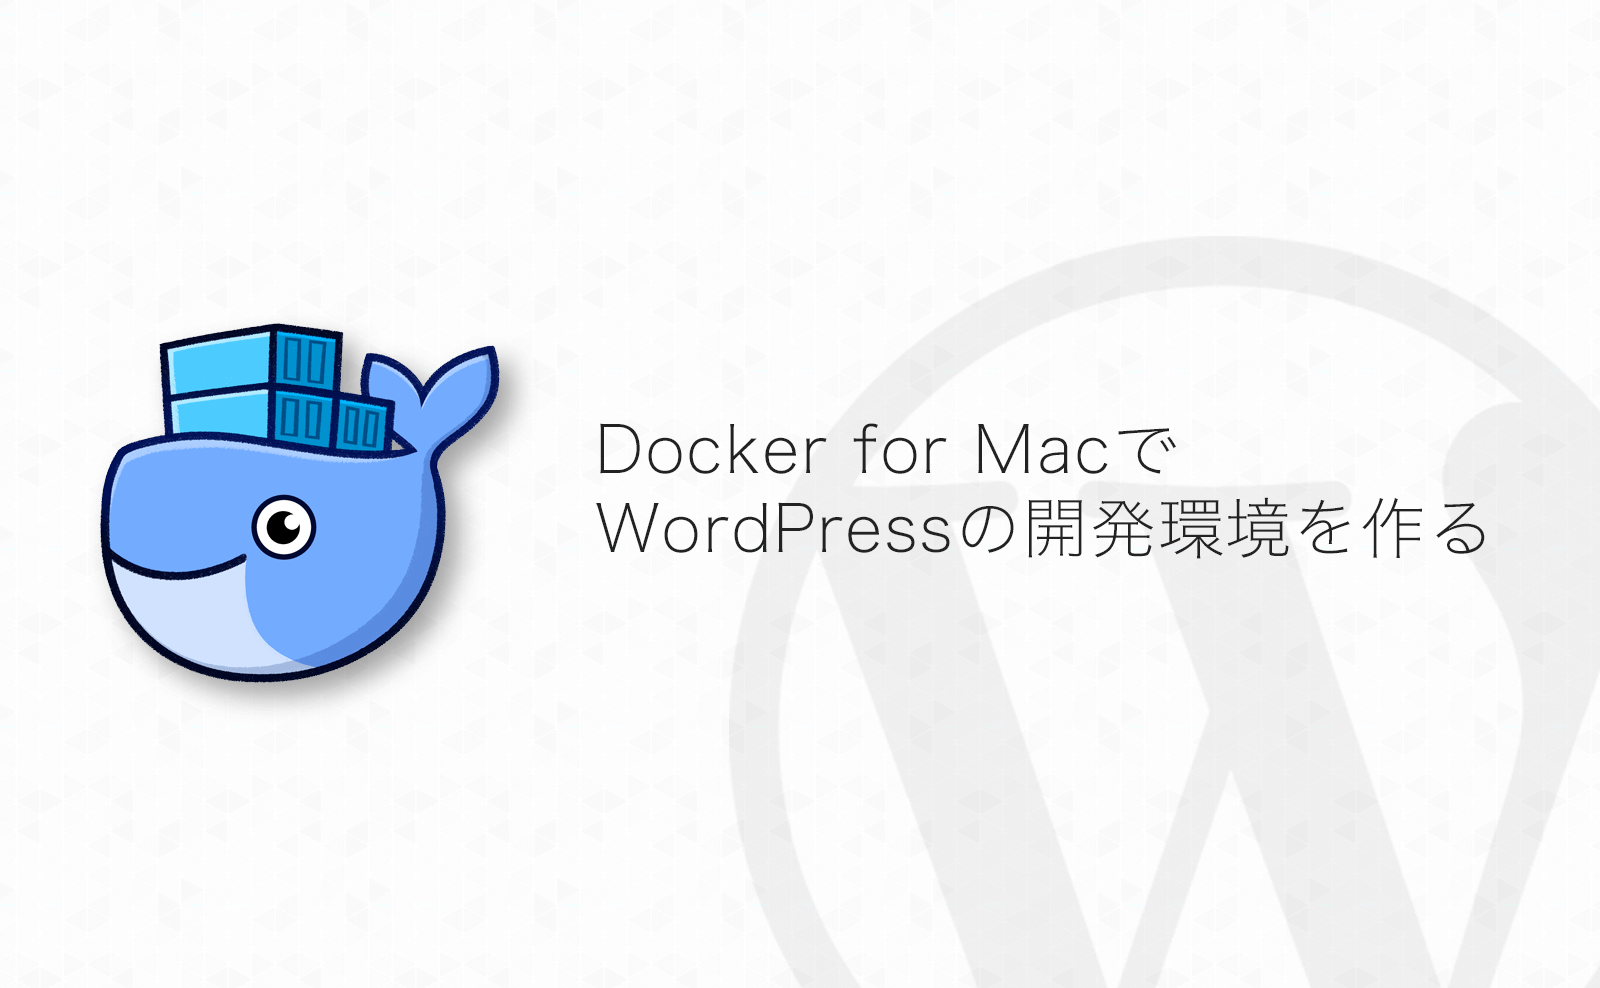 【WordPress】Docker for Mac & Docker ComposeでWordPressの開発環境を作ってみる